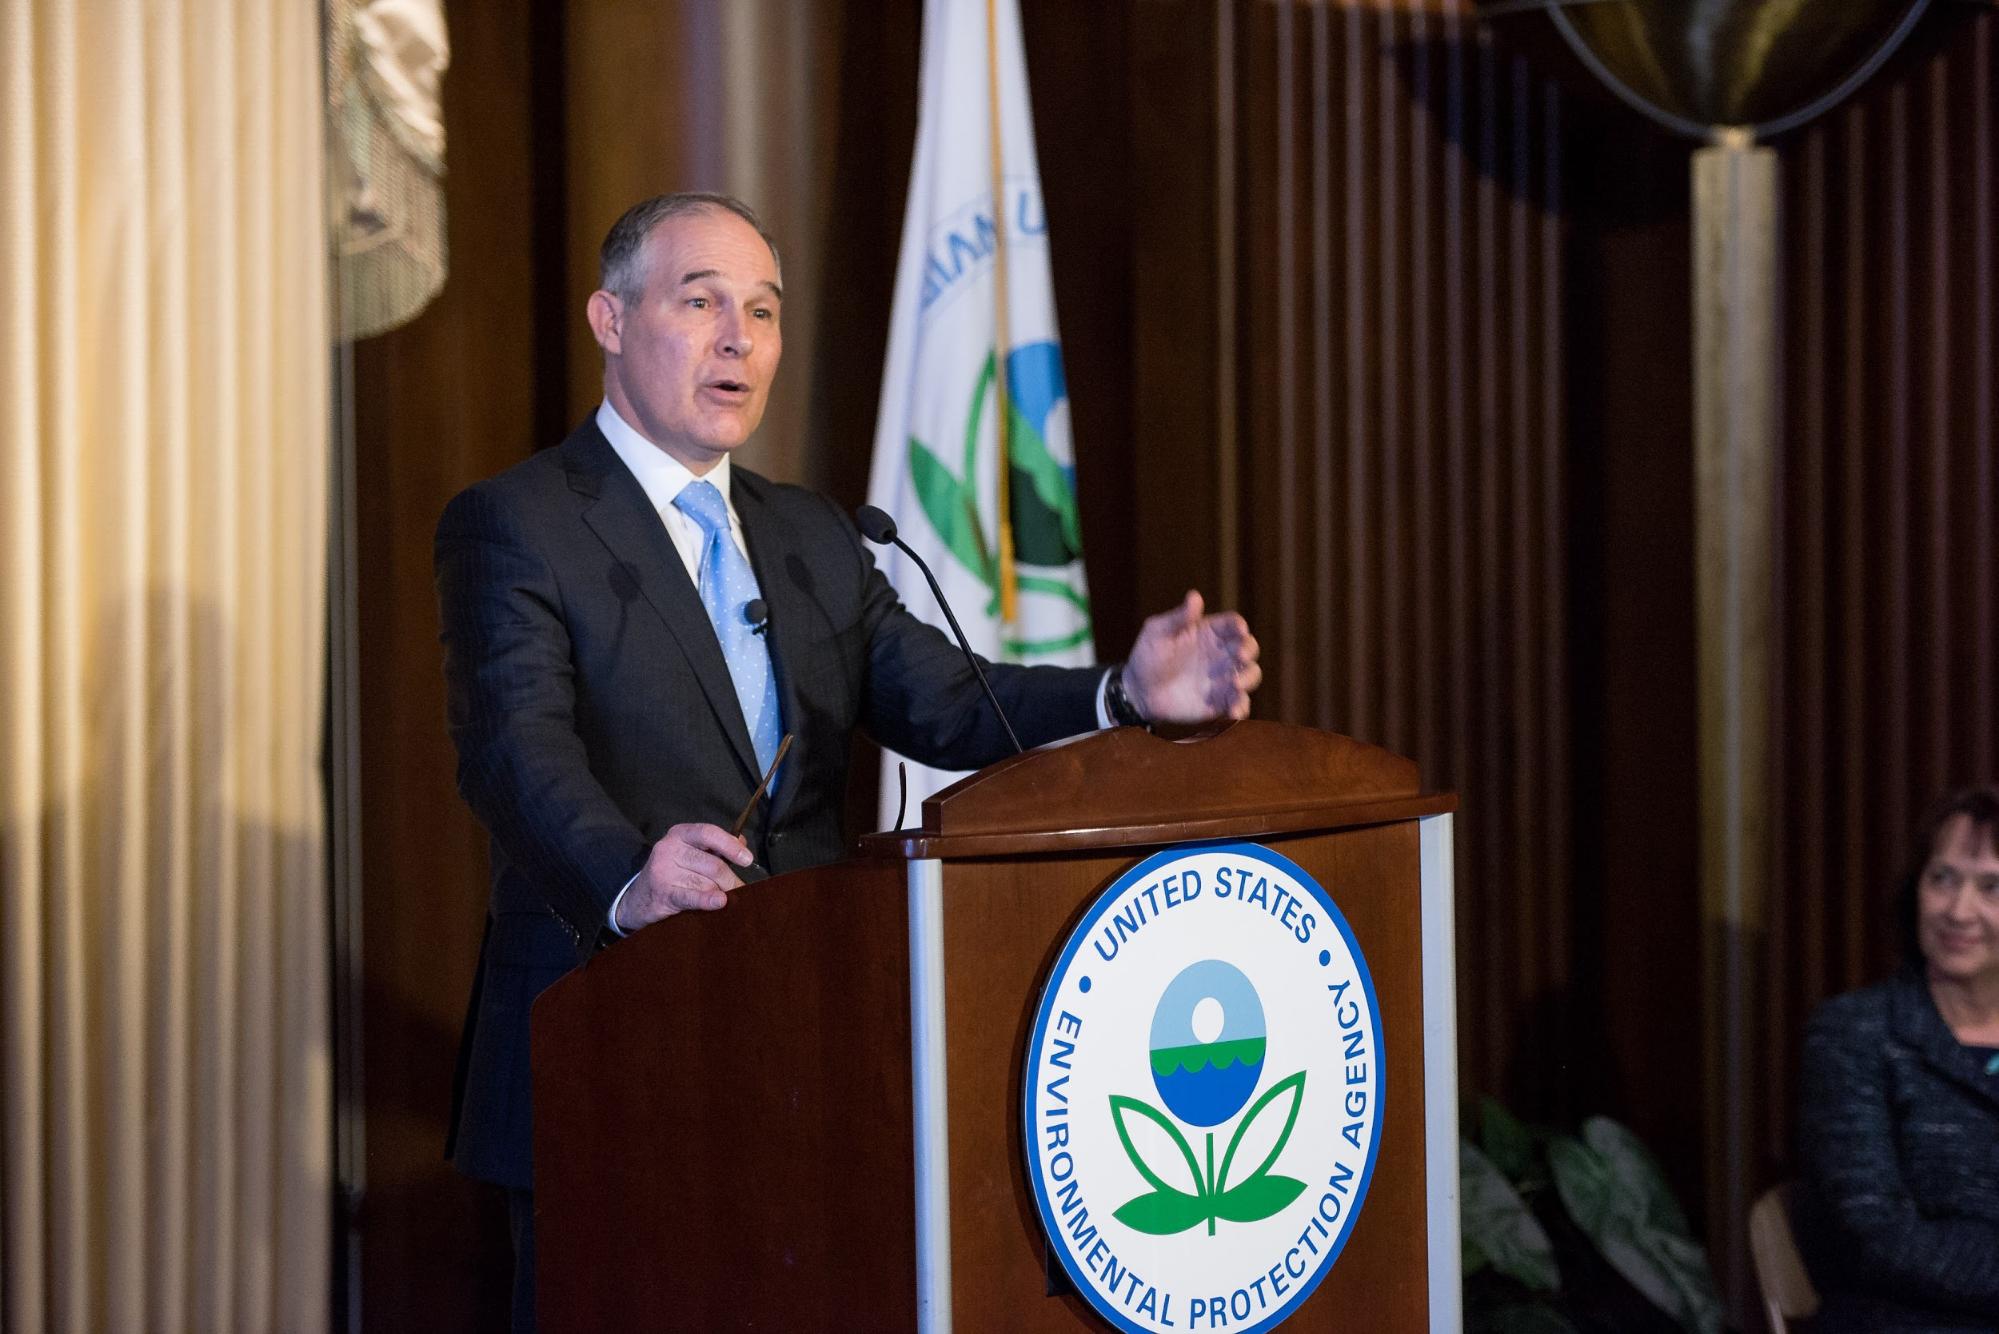 EPA Administrator Scott Pruitt speaks at a podium